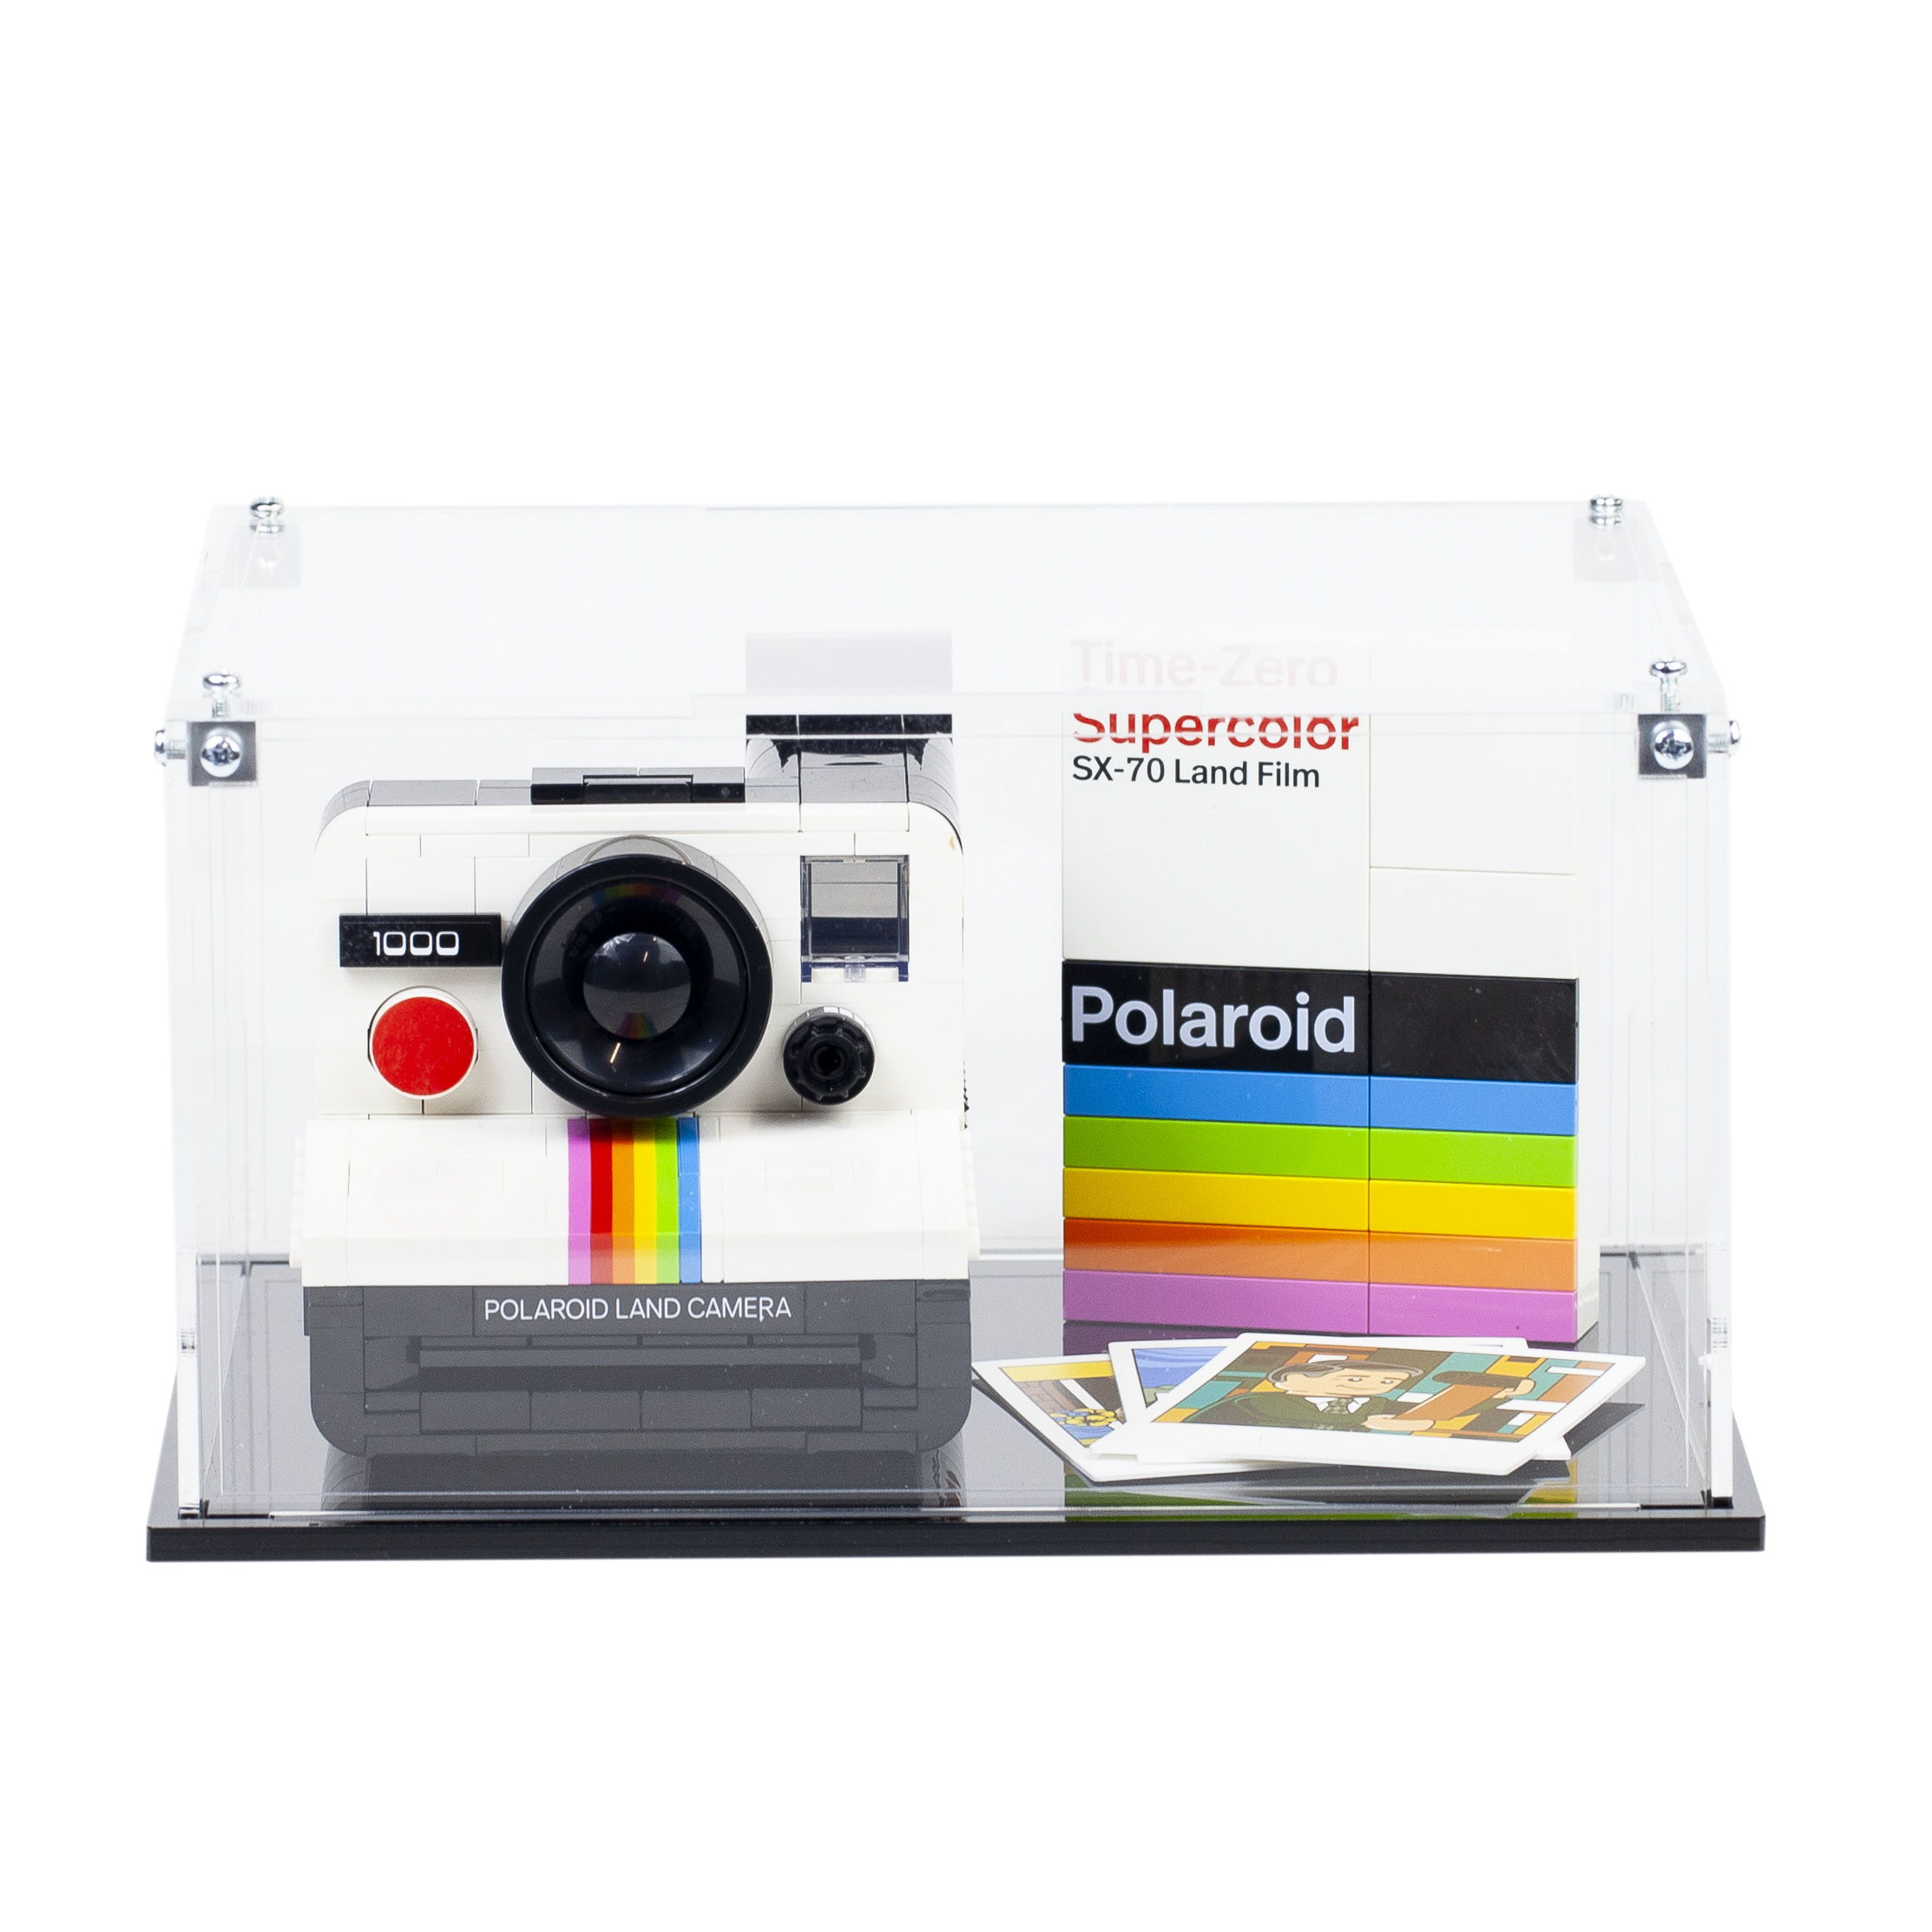 Acrylic Display Case for the LEGO Polaroid OneStep SX-70 Camera